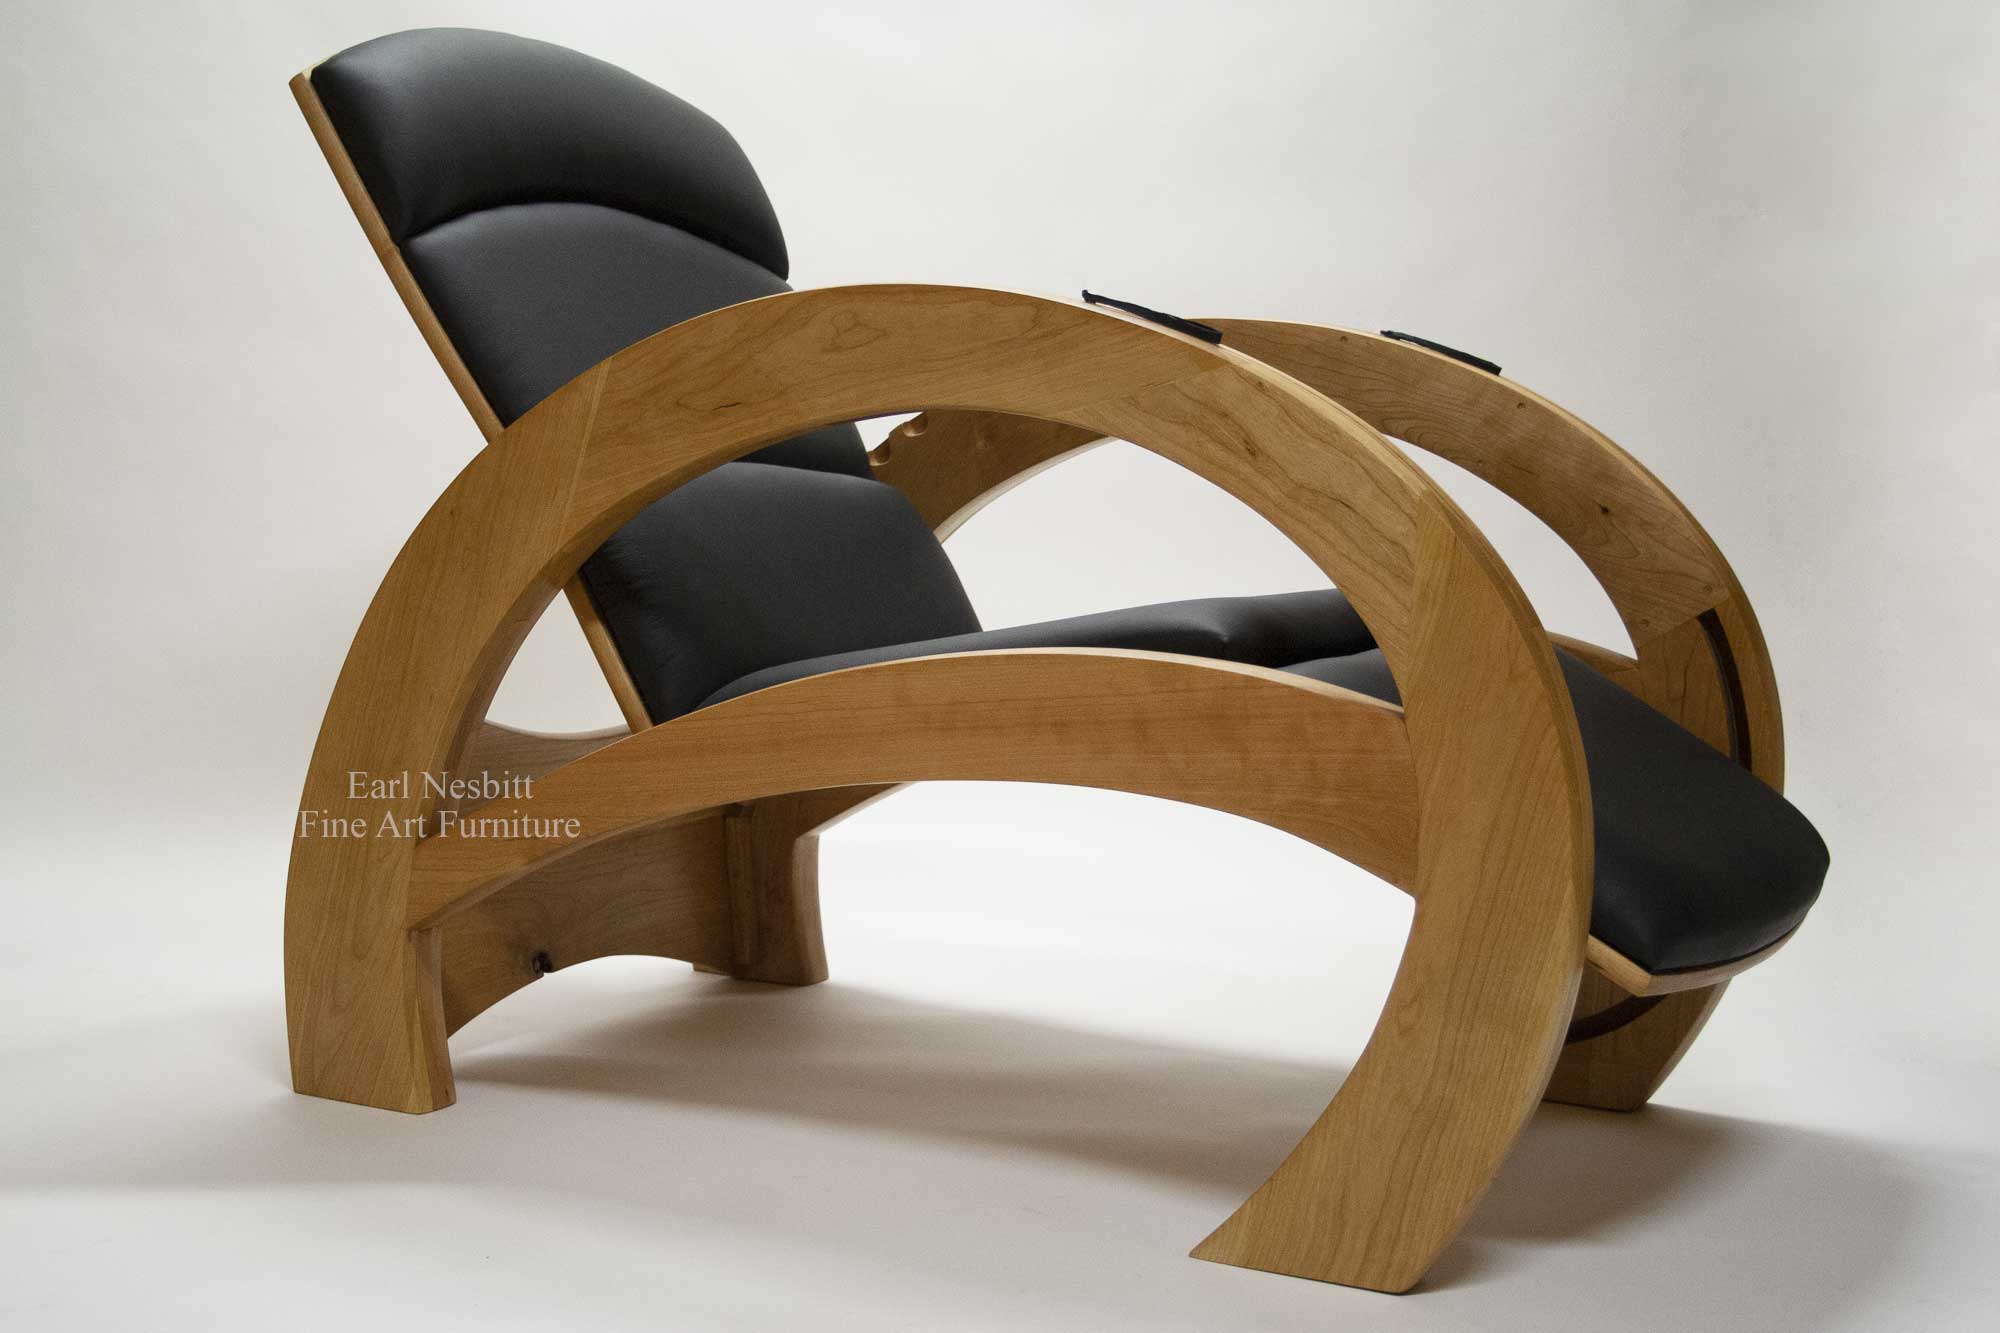 Custom Made Furniture, Fine Art Furniture   Earl Nesbitt